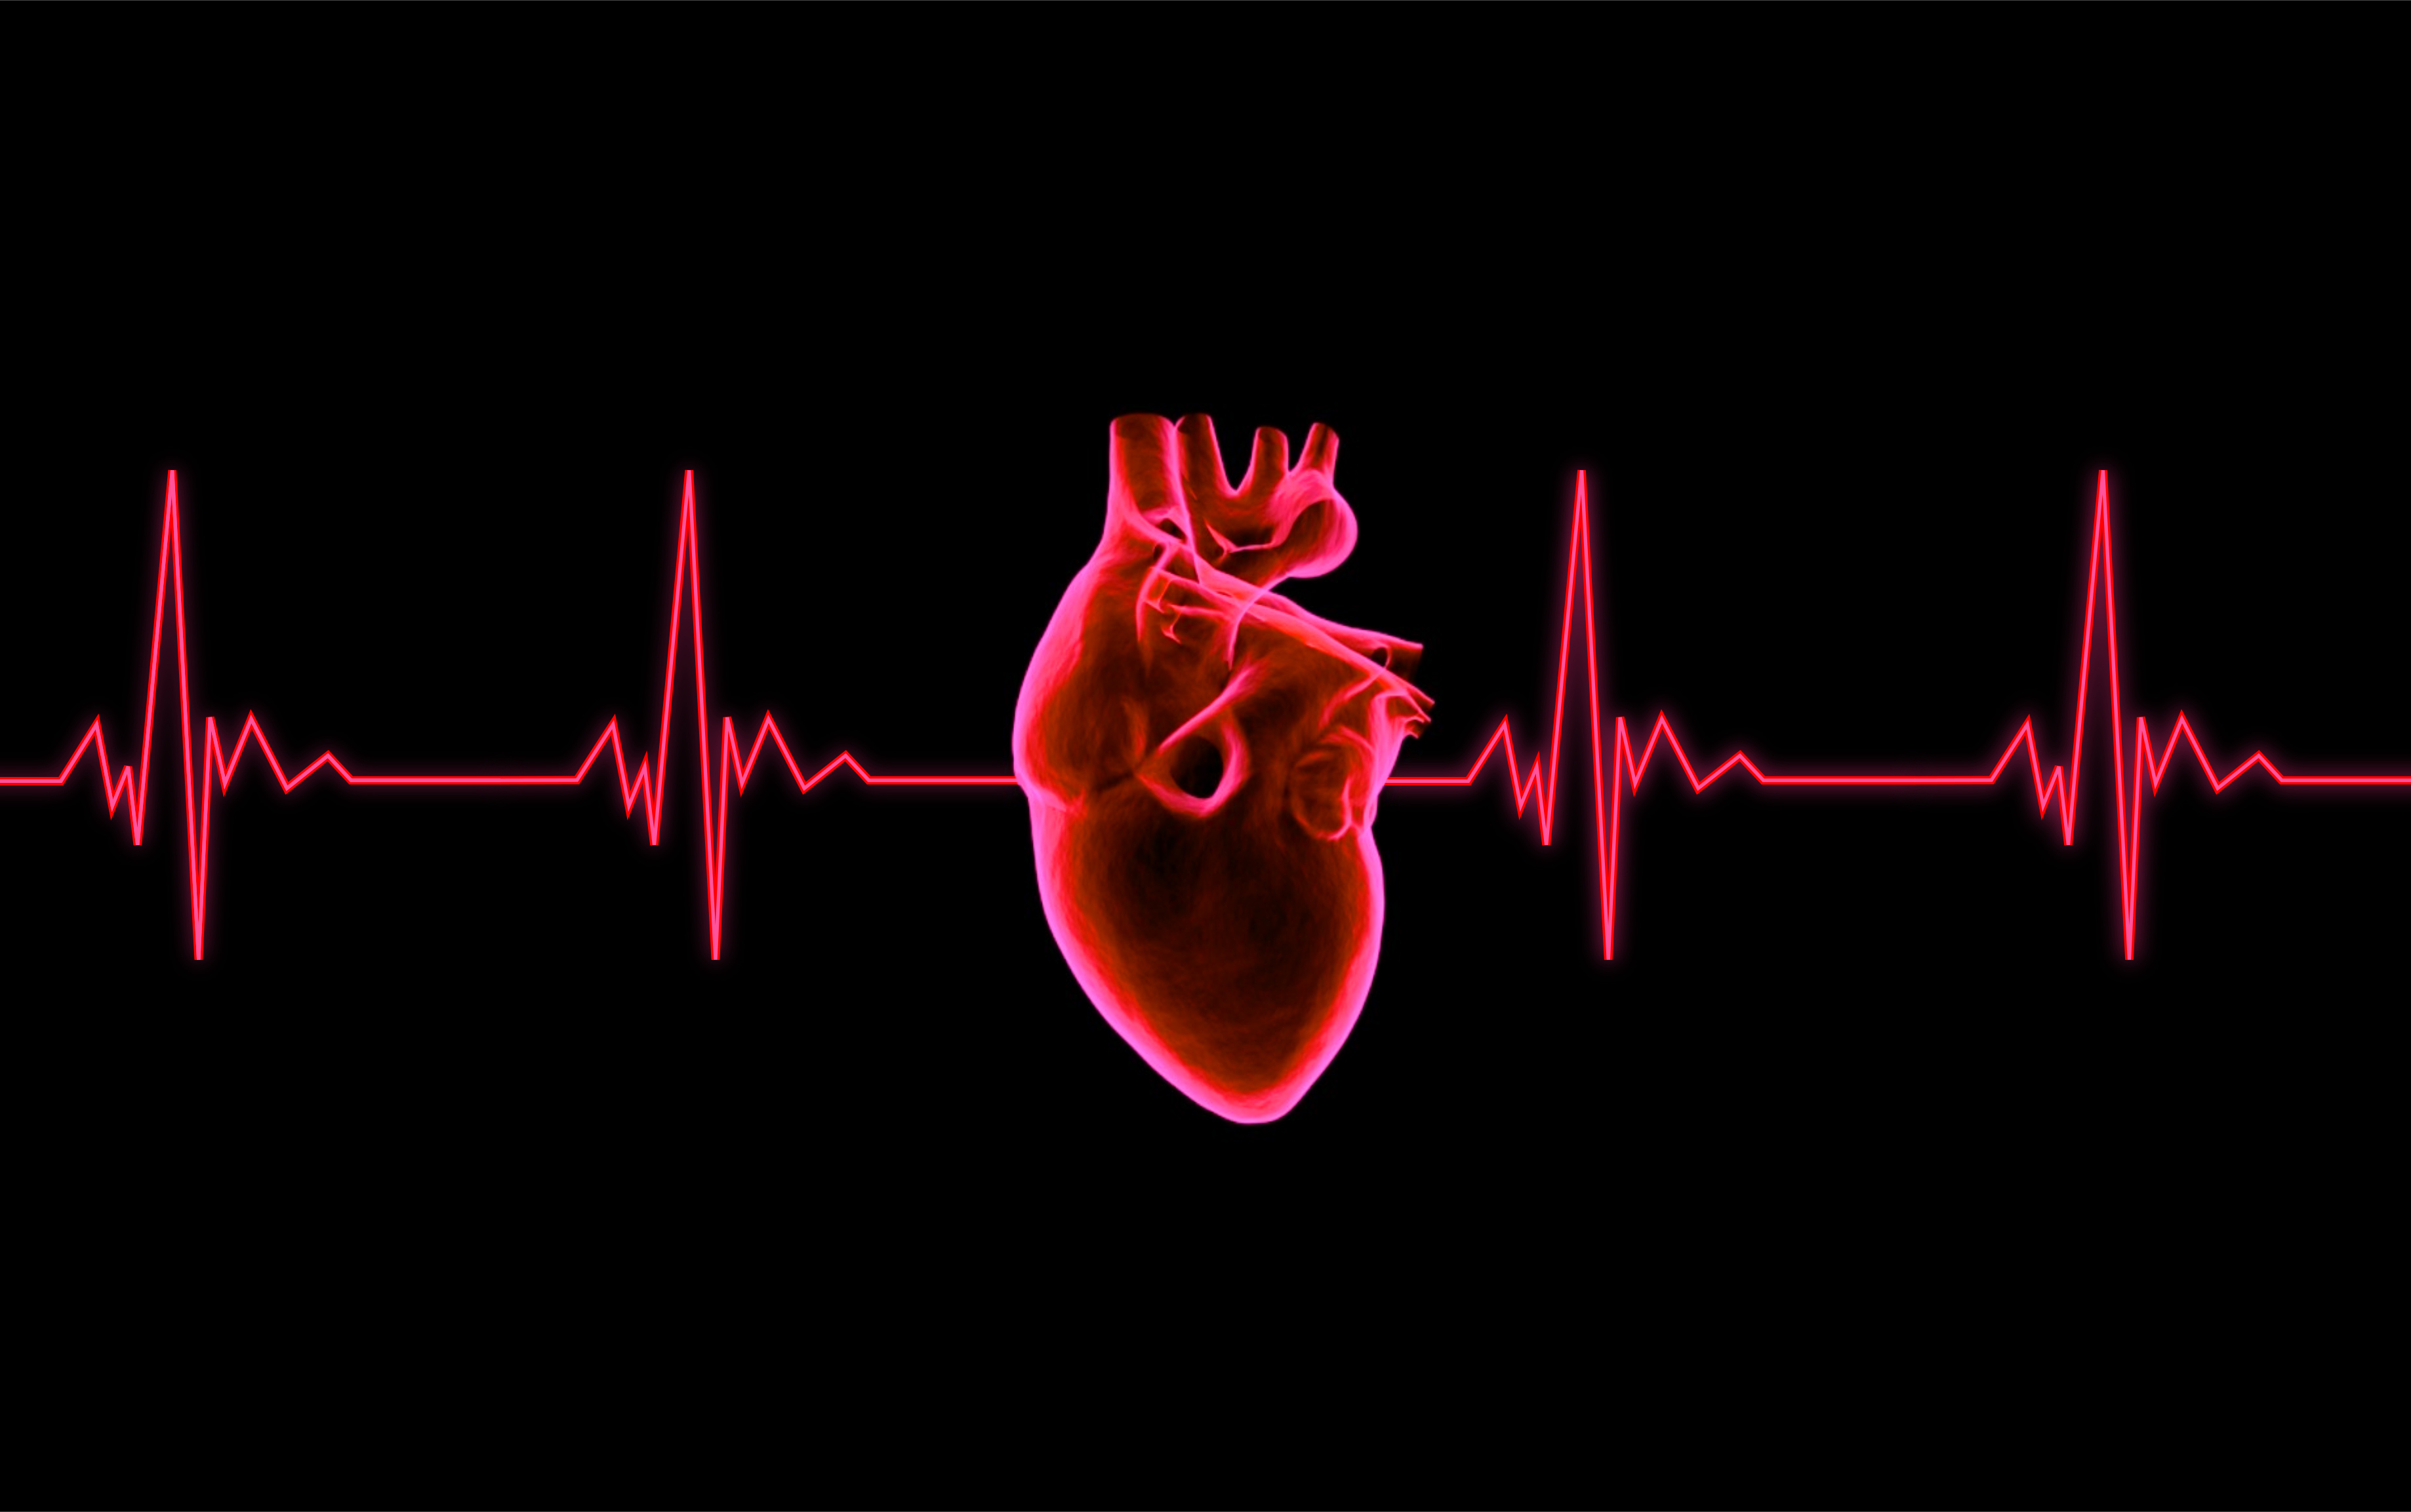 heartbeat health